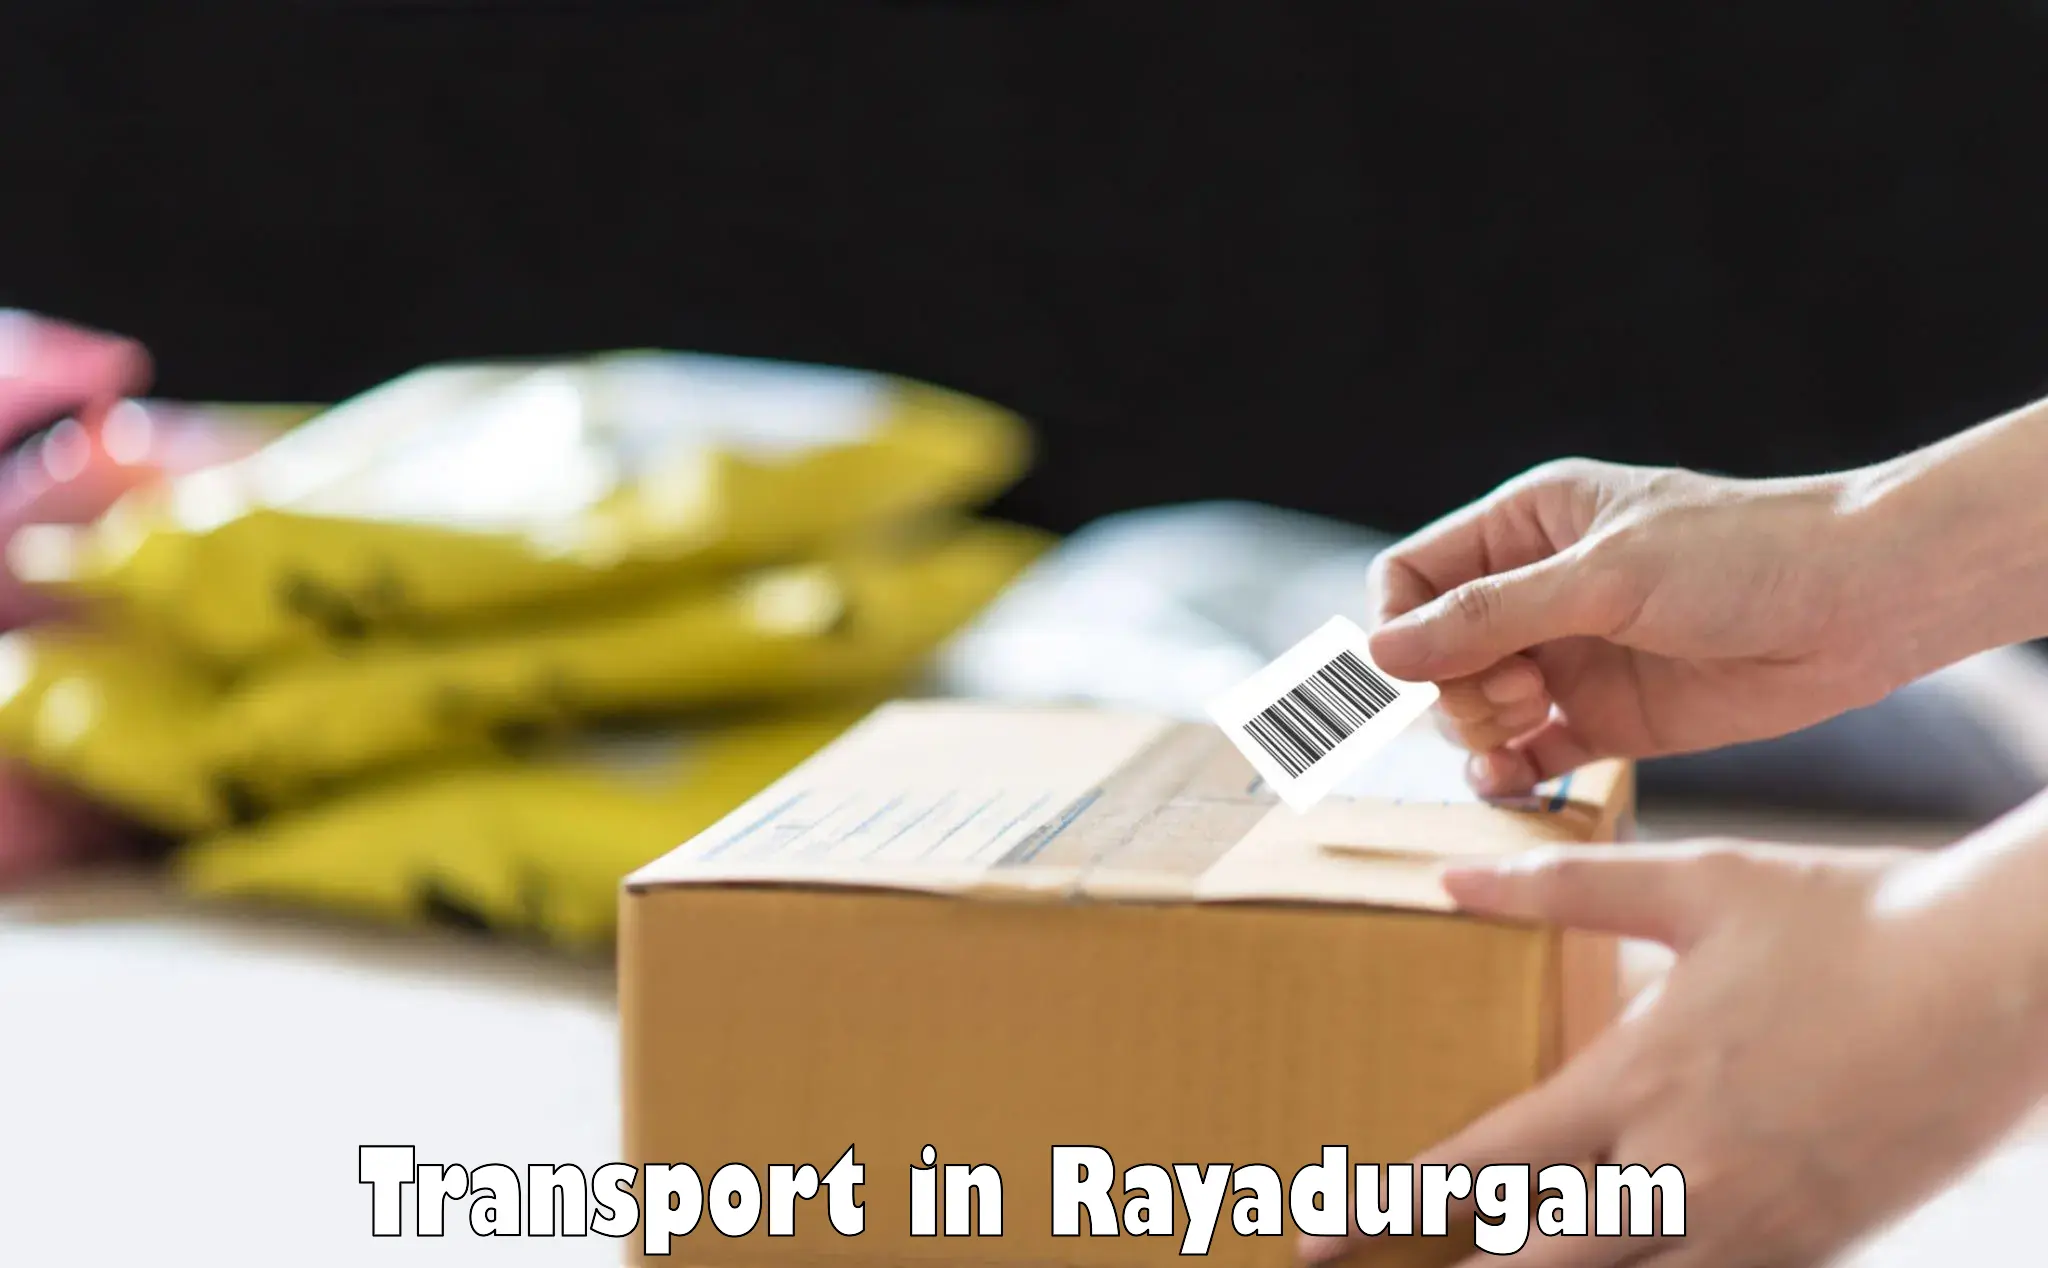 Furniture transport service in Rayadurgam